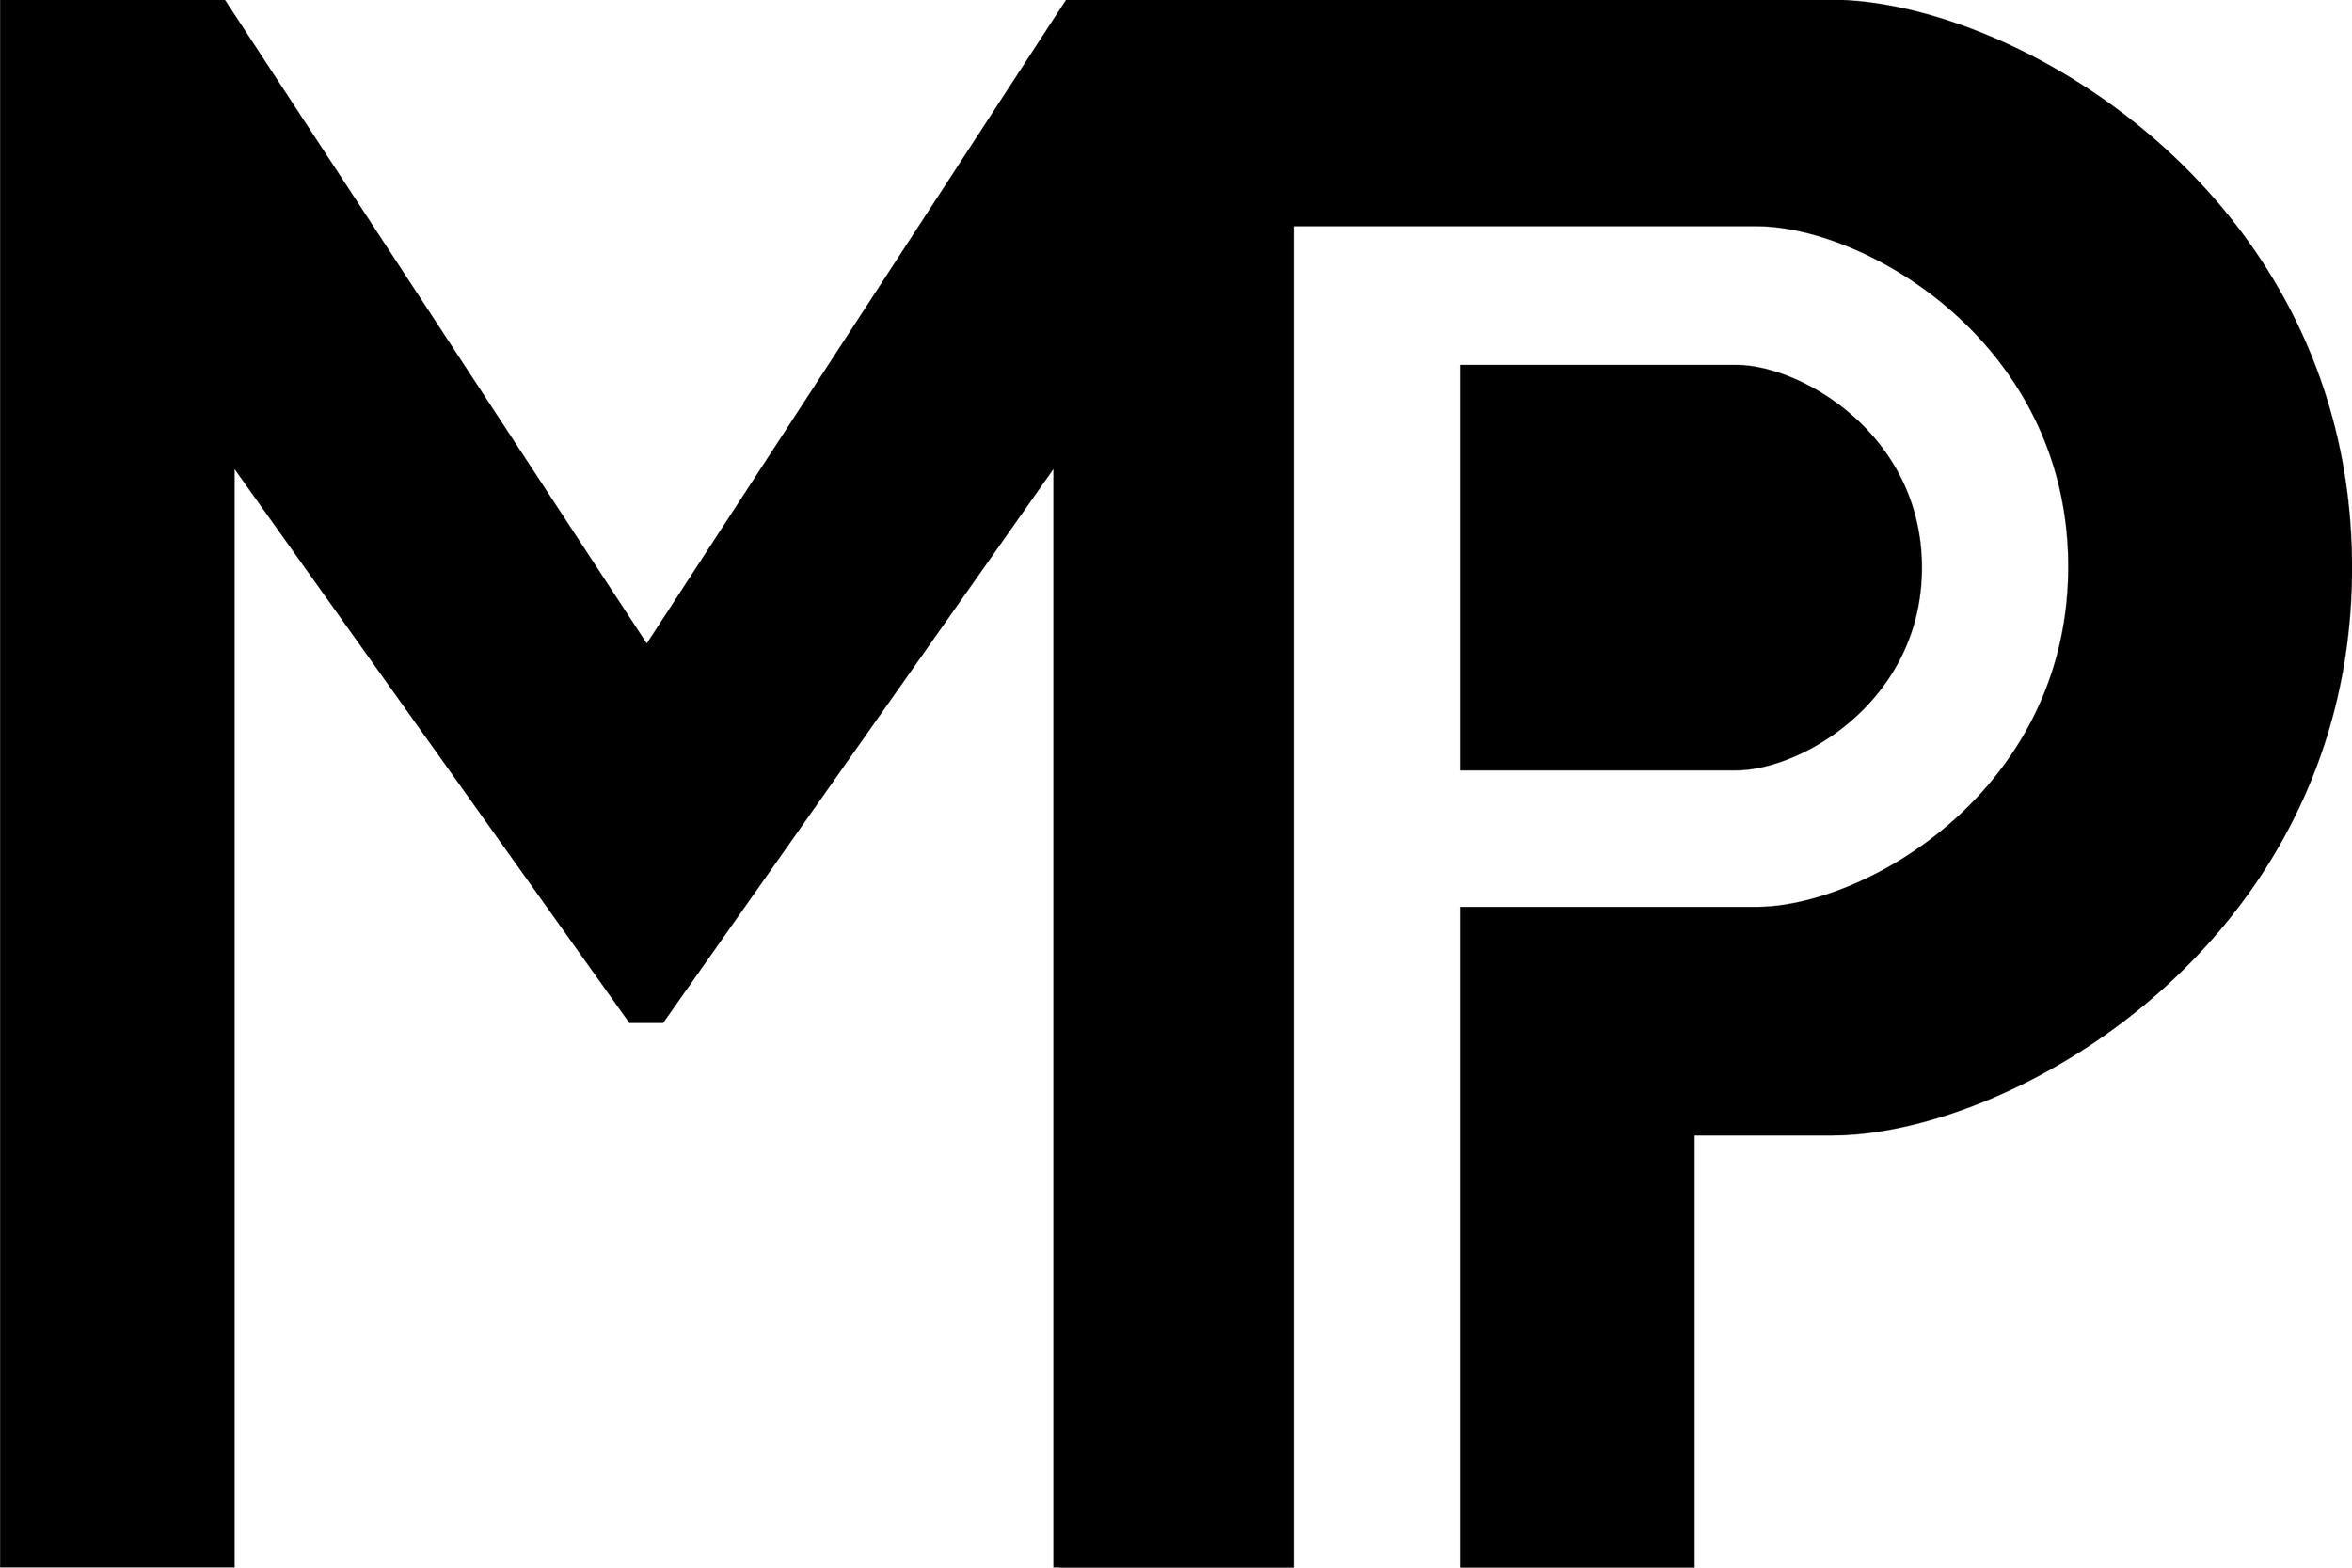 Megapixy (logo)